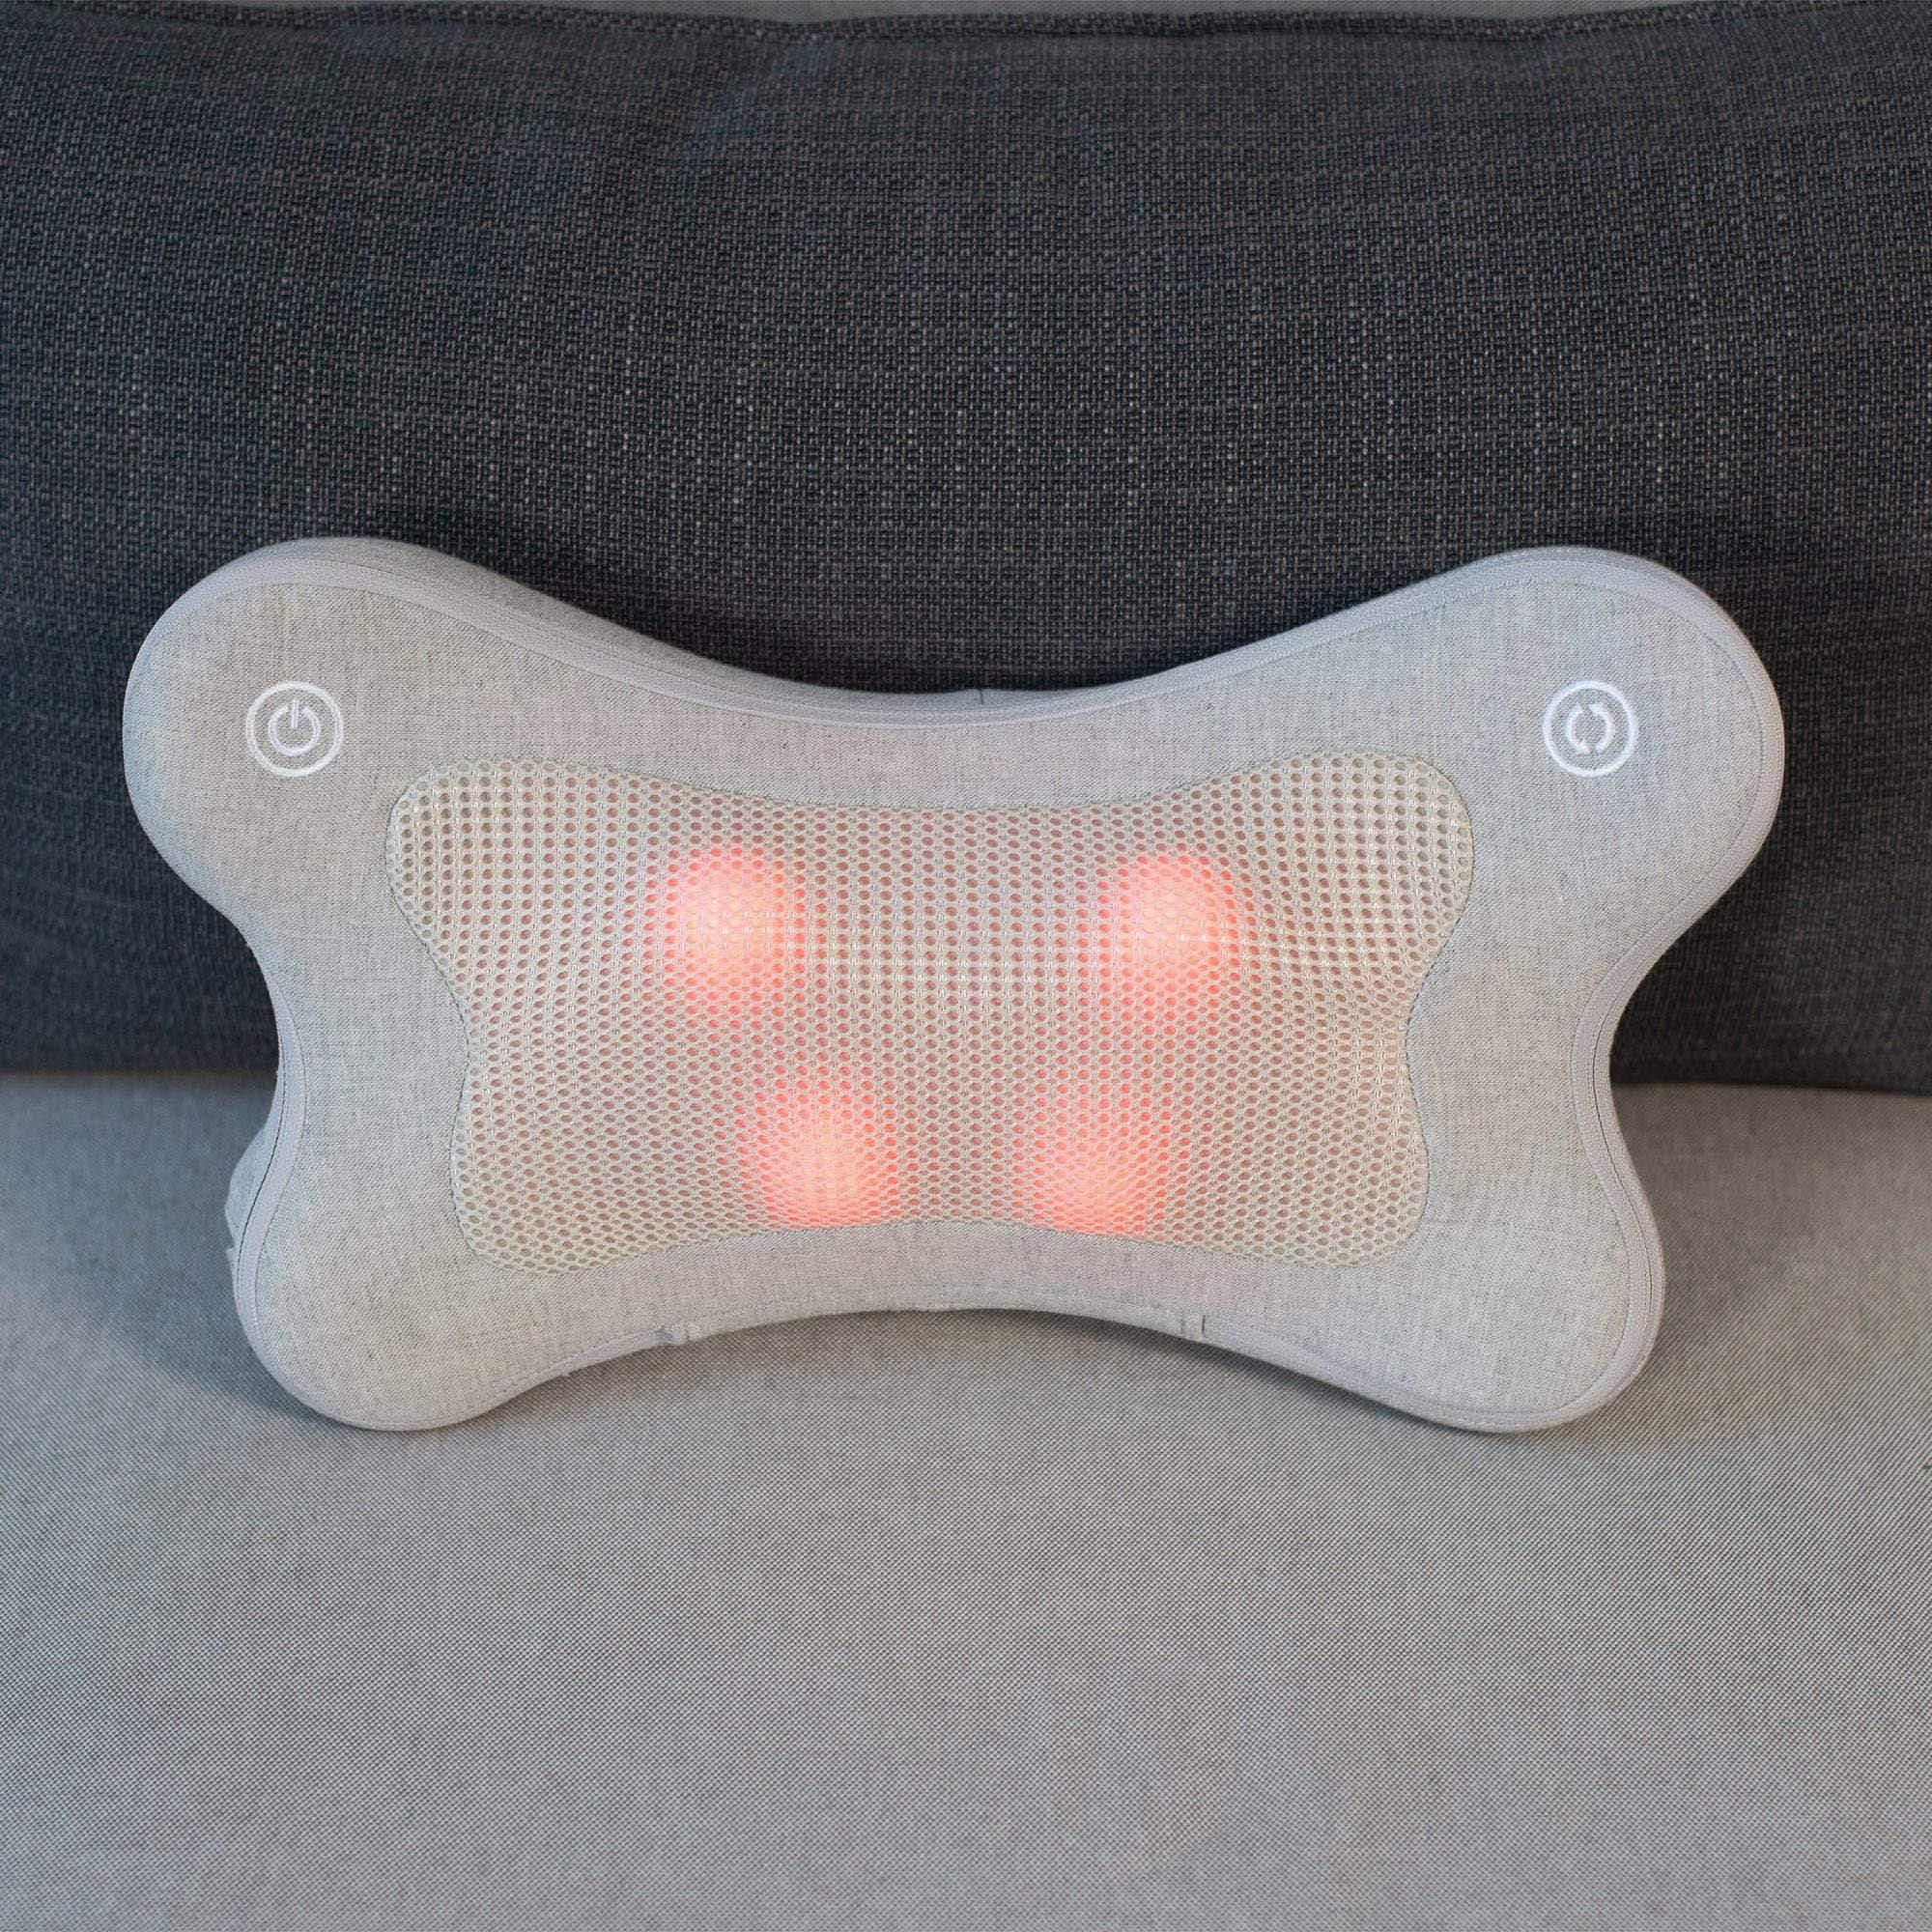 Synca iPuffy - Premium 3D Heated Lumbar Massager